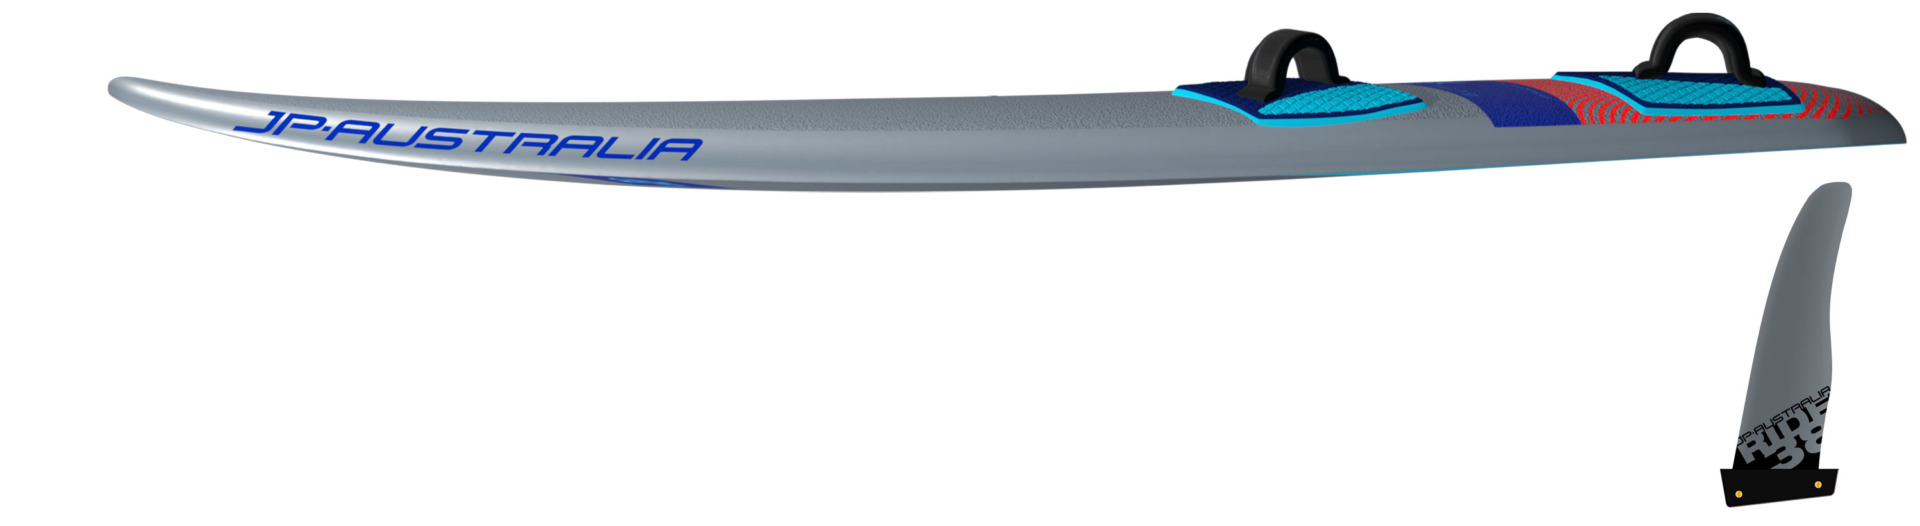 ES profil rails super ride windsurfing karlin 2021